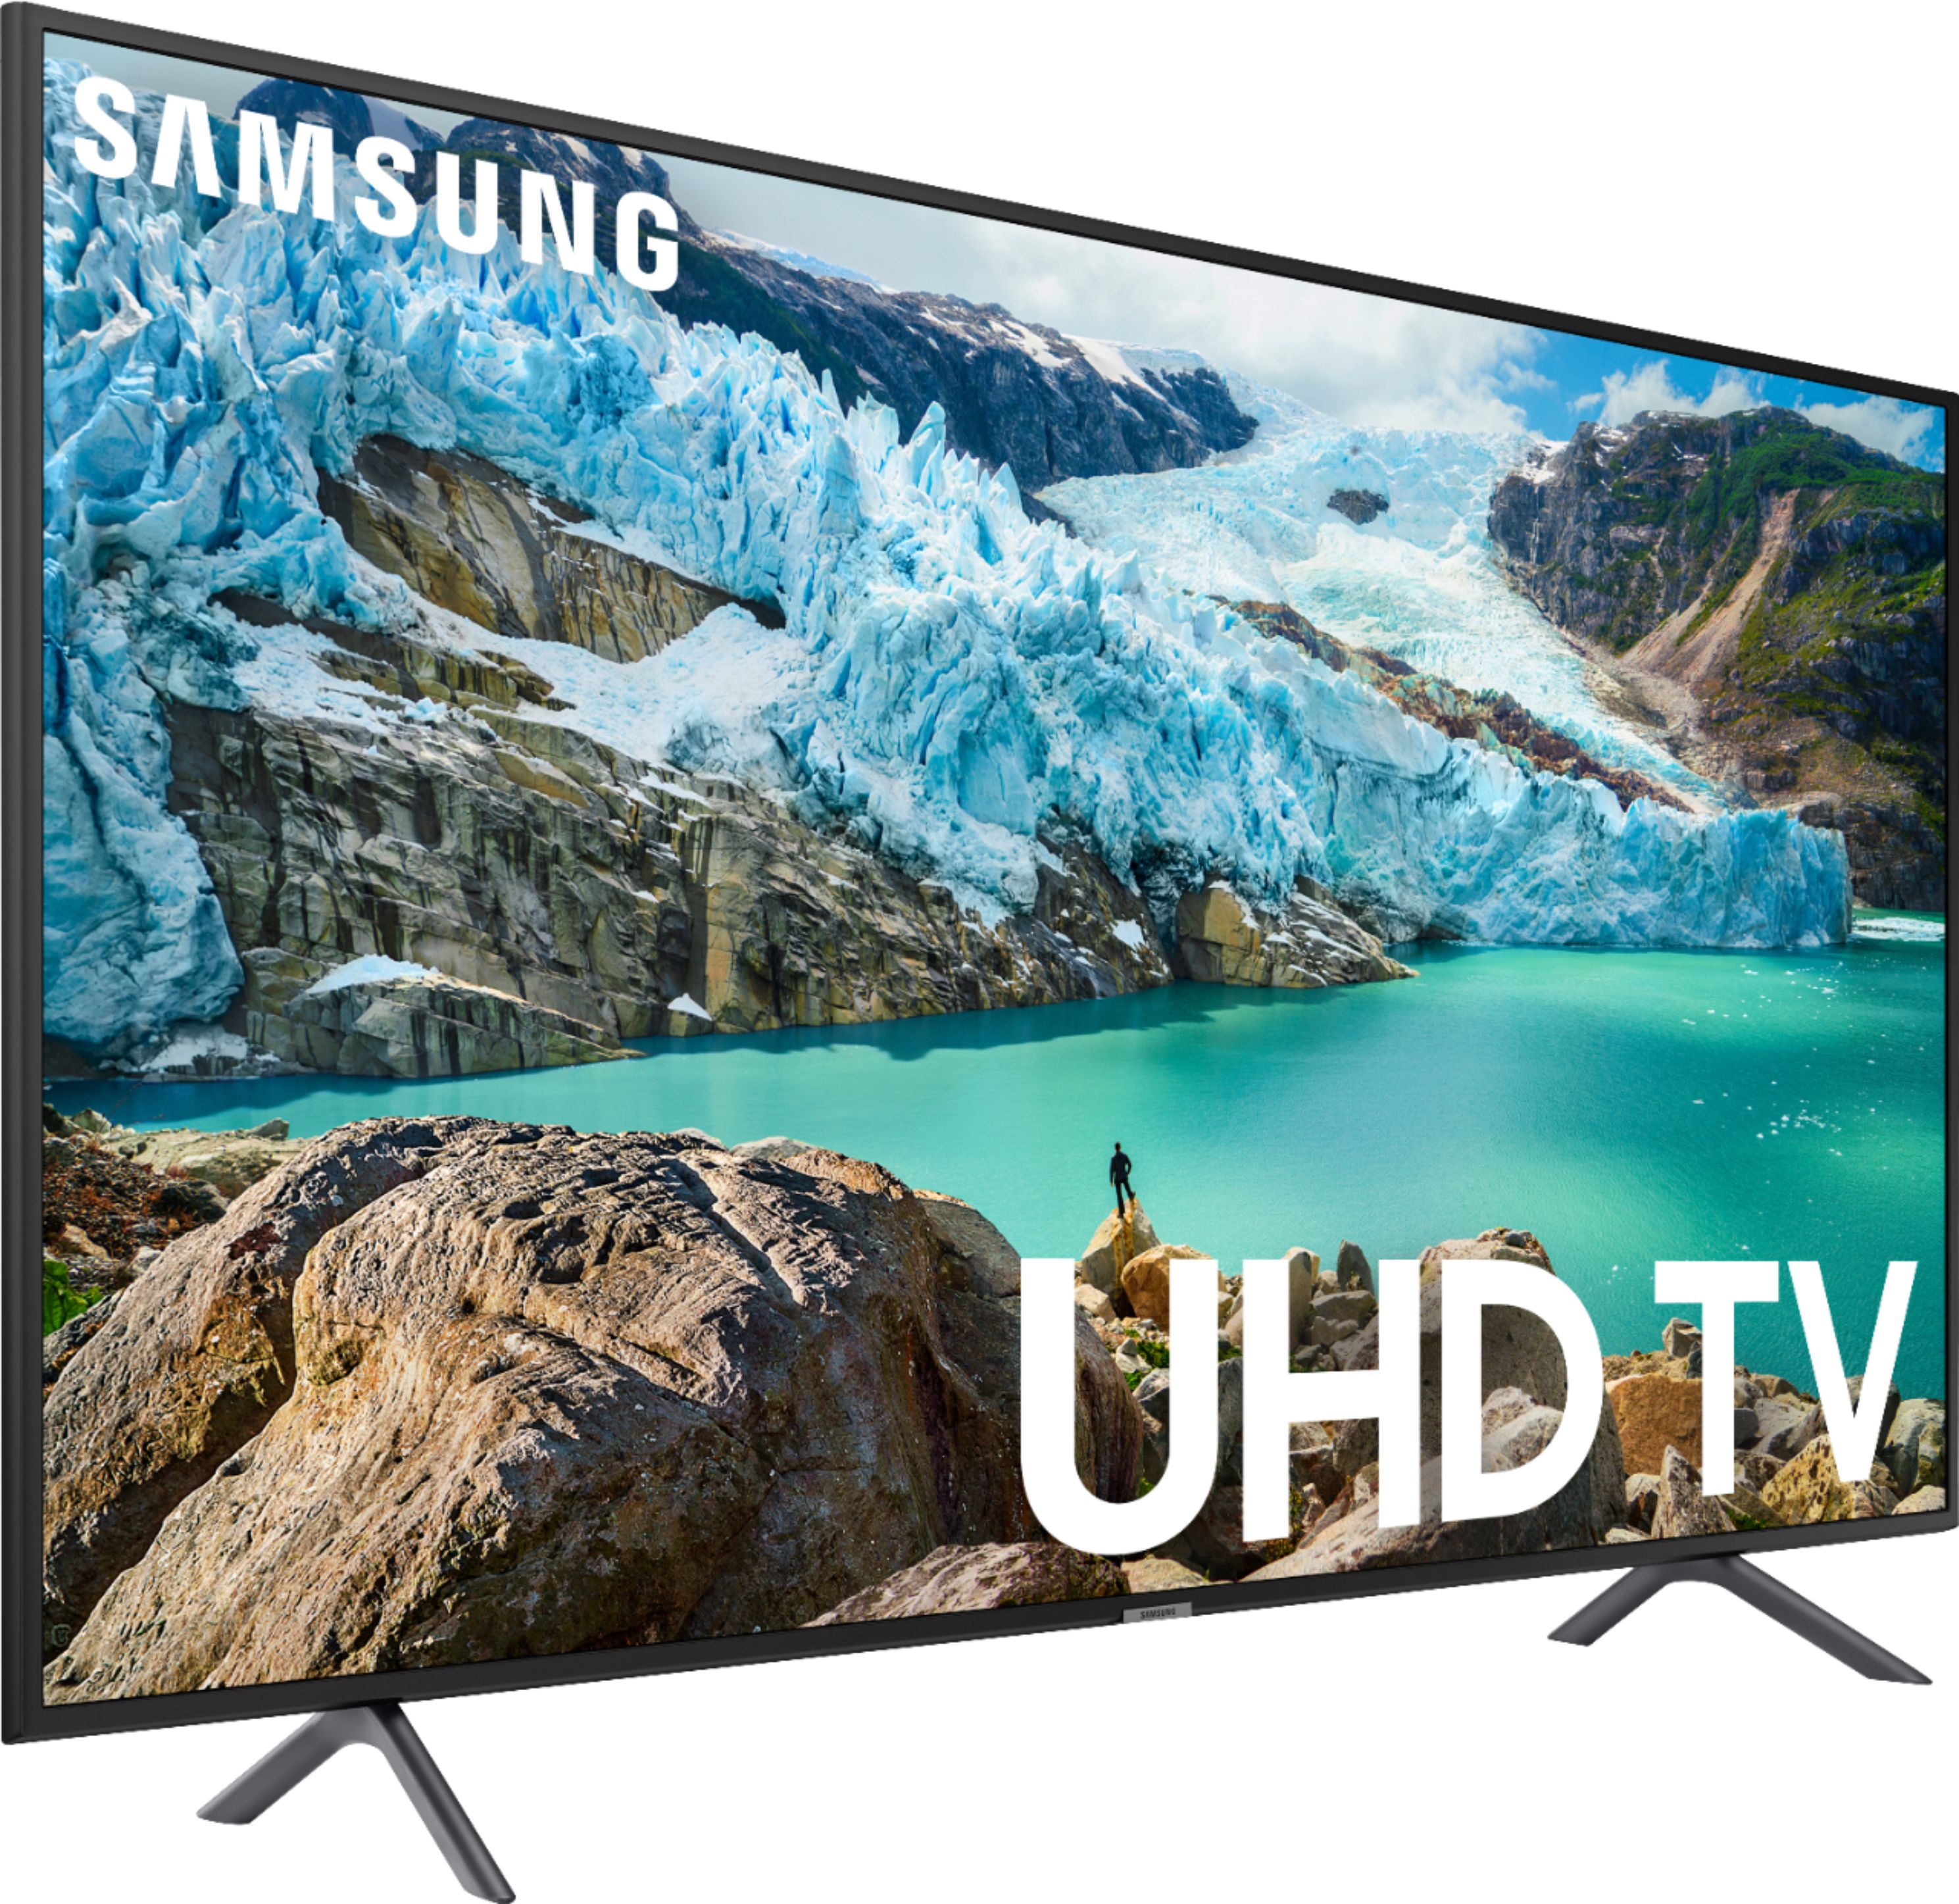 Best Buy: Samsung 43 Class LED 7 Series 2160p Smart 4K UHD TV with HDR  UN43RU7100FXZA